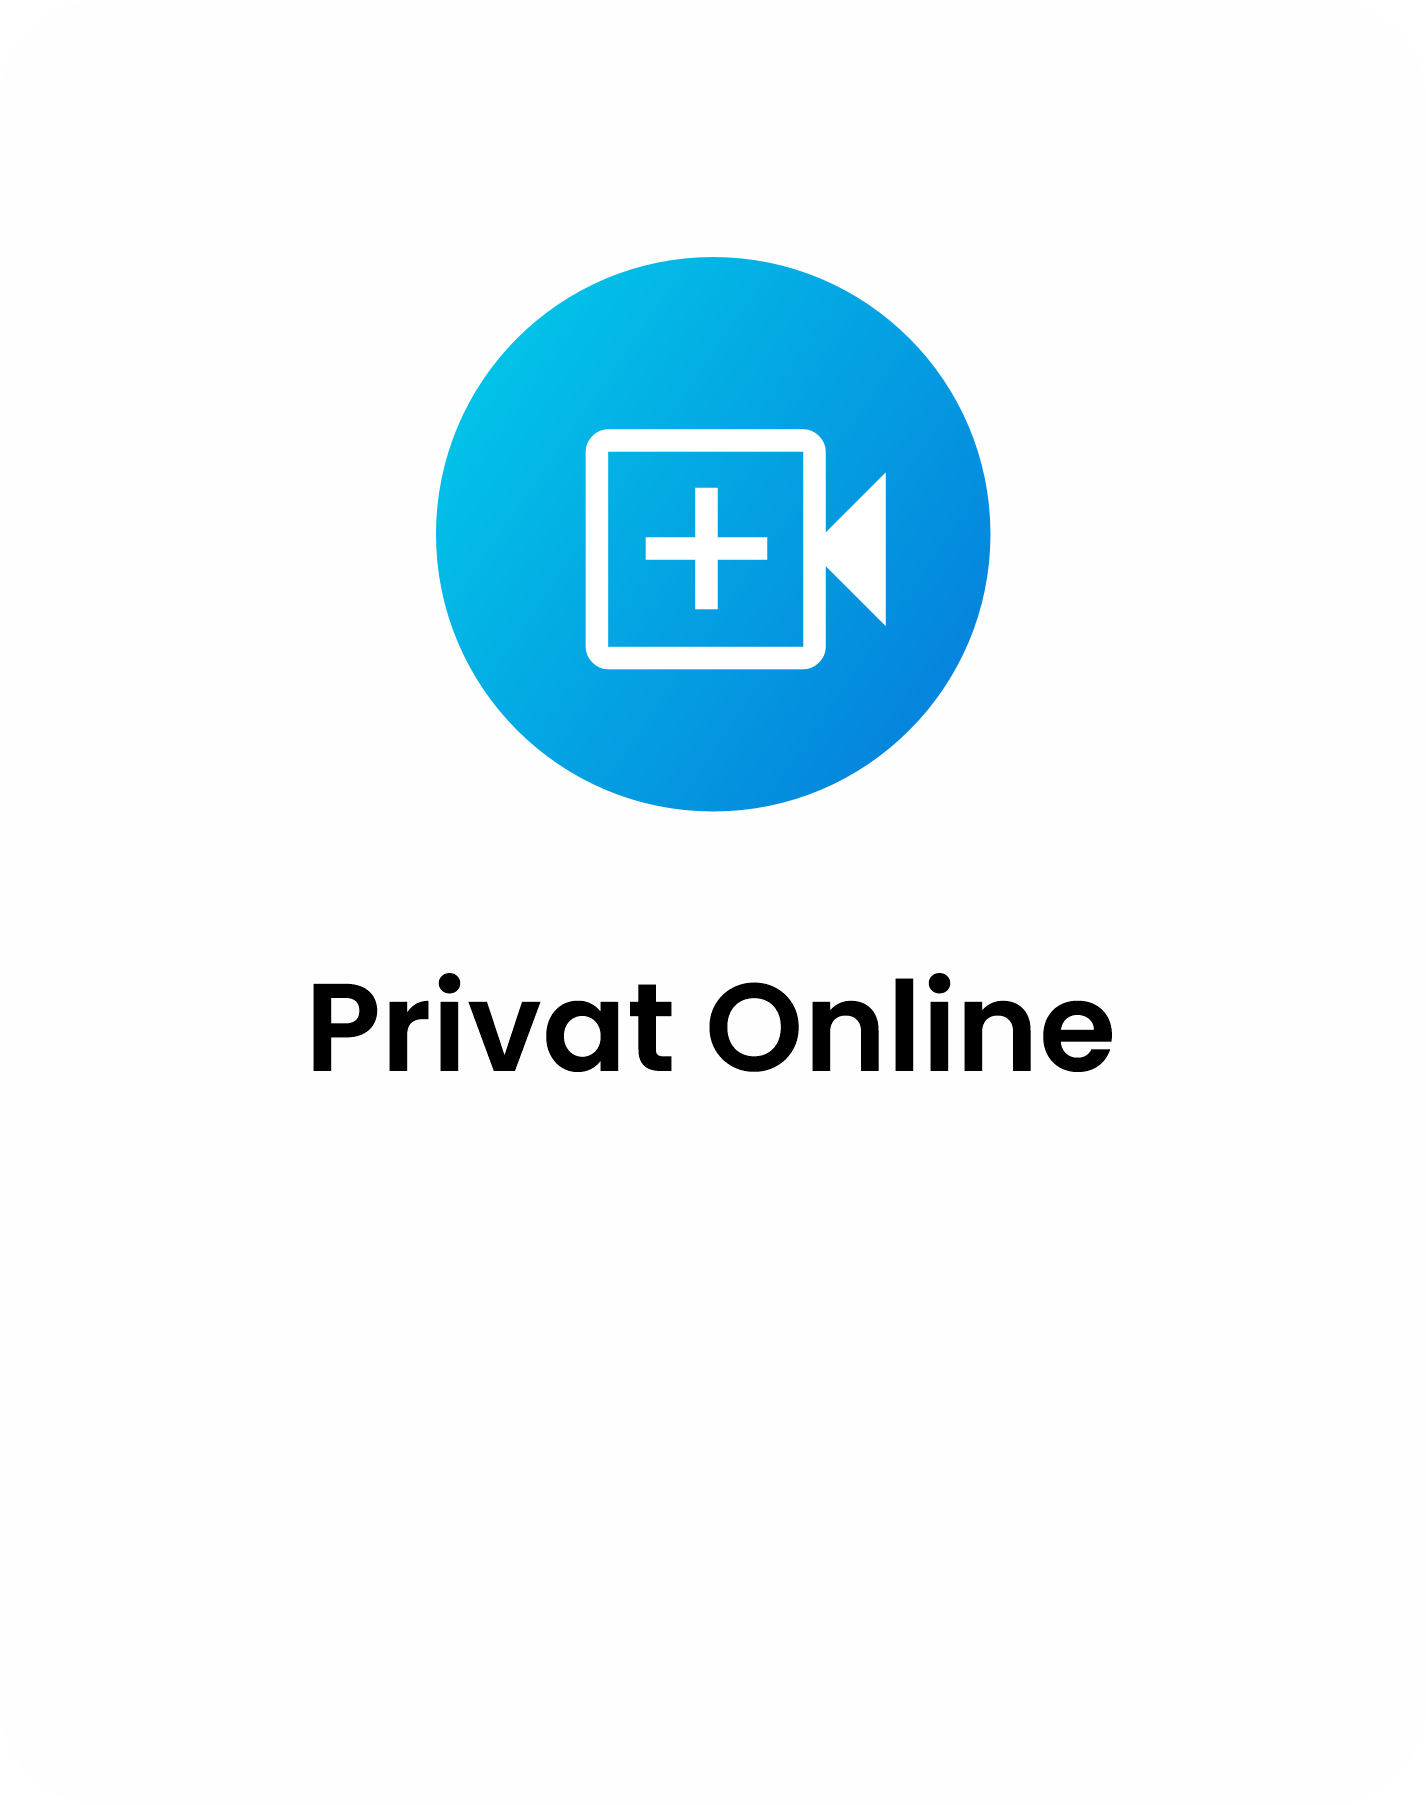 Privat_Online